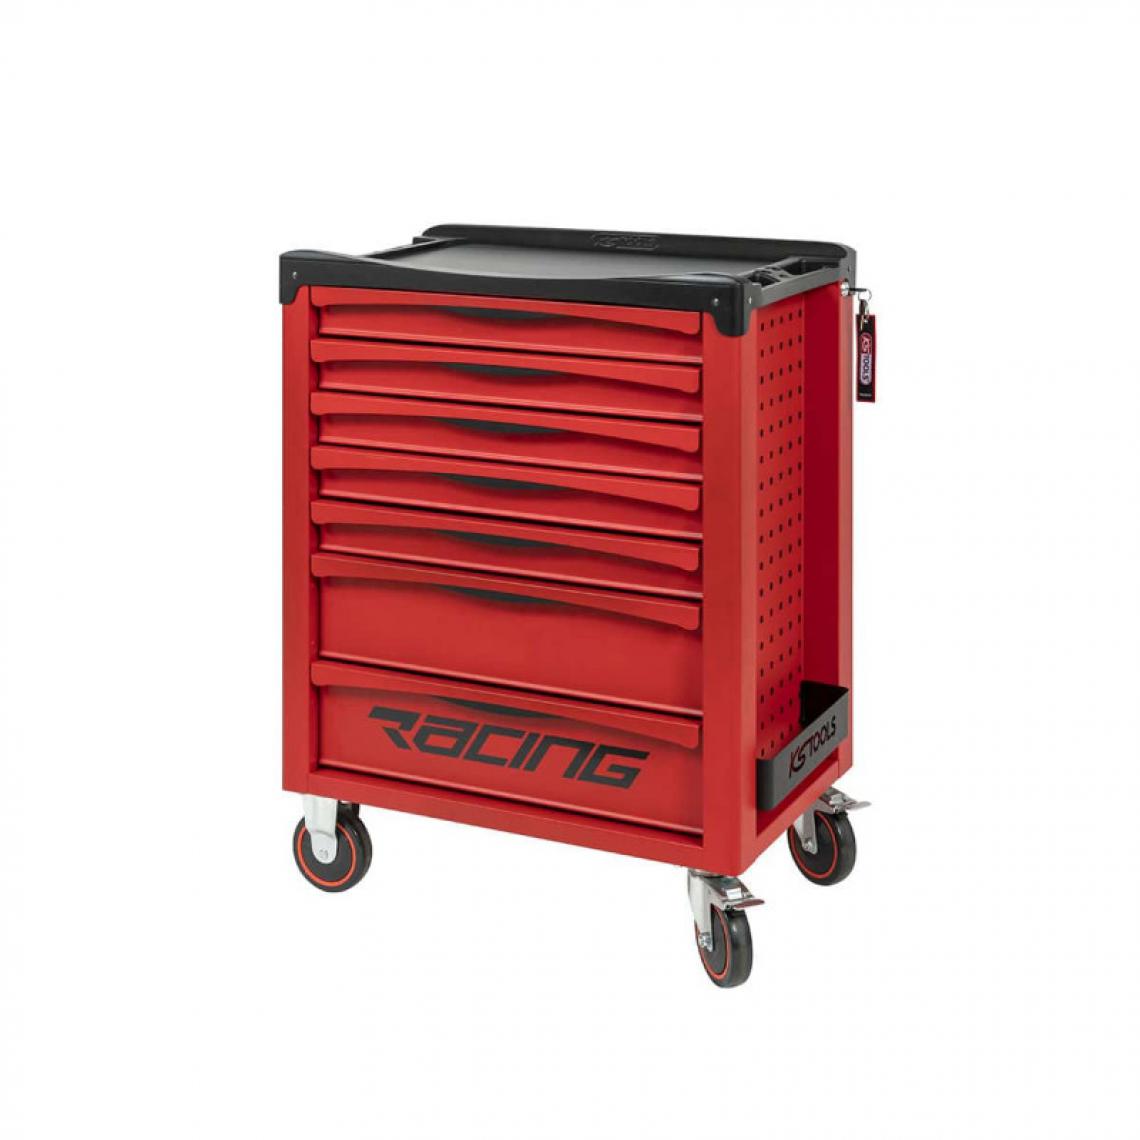 Ks Tools - Servante KS TOOLS Racing - Rouge - 7 tiroirs - 855.0007 - Diable, chariot